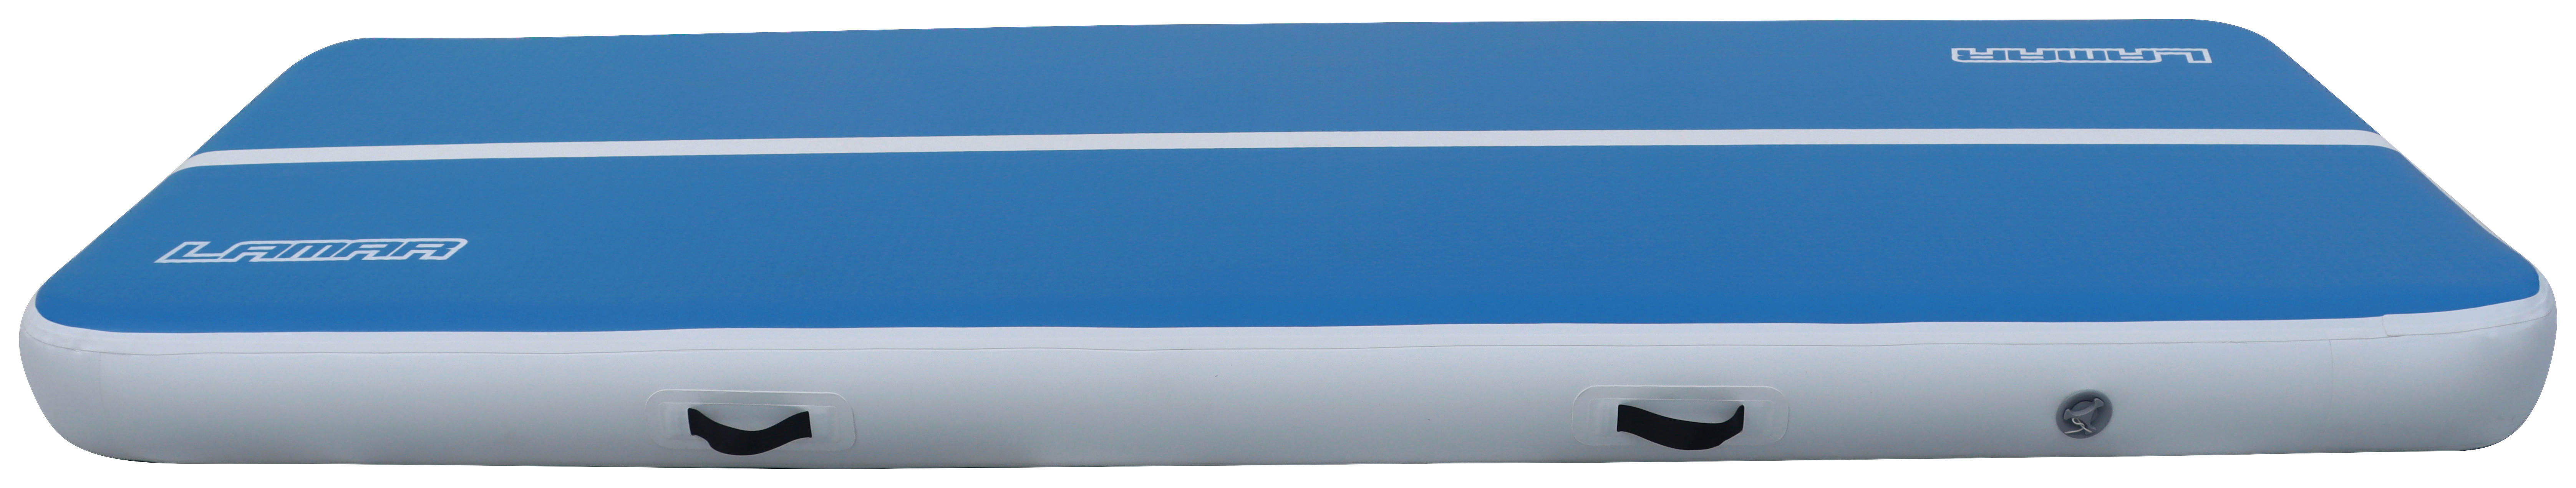 GYMNASTIKMATTE, aufblasbar  - Blau/Weiß, Basics, Kunststoff (300/100/20cm)